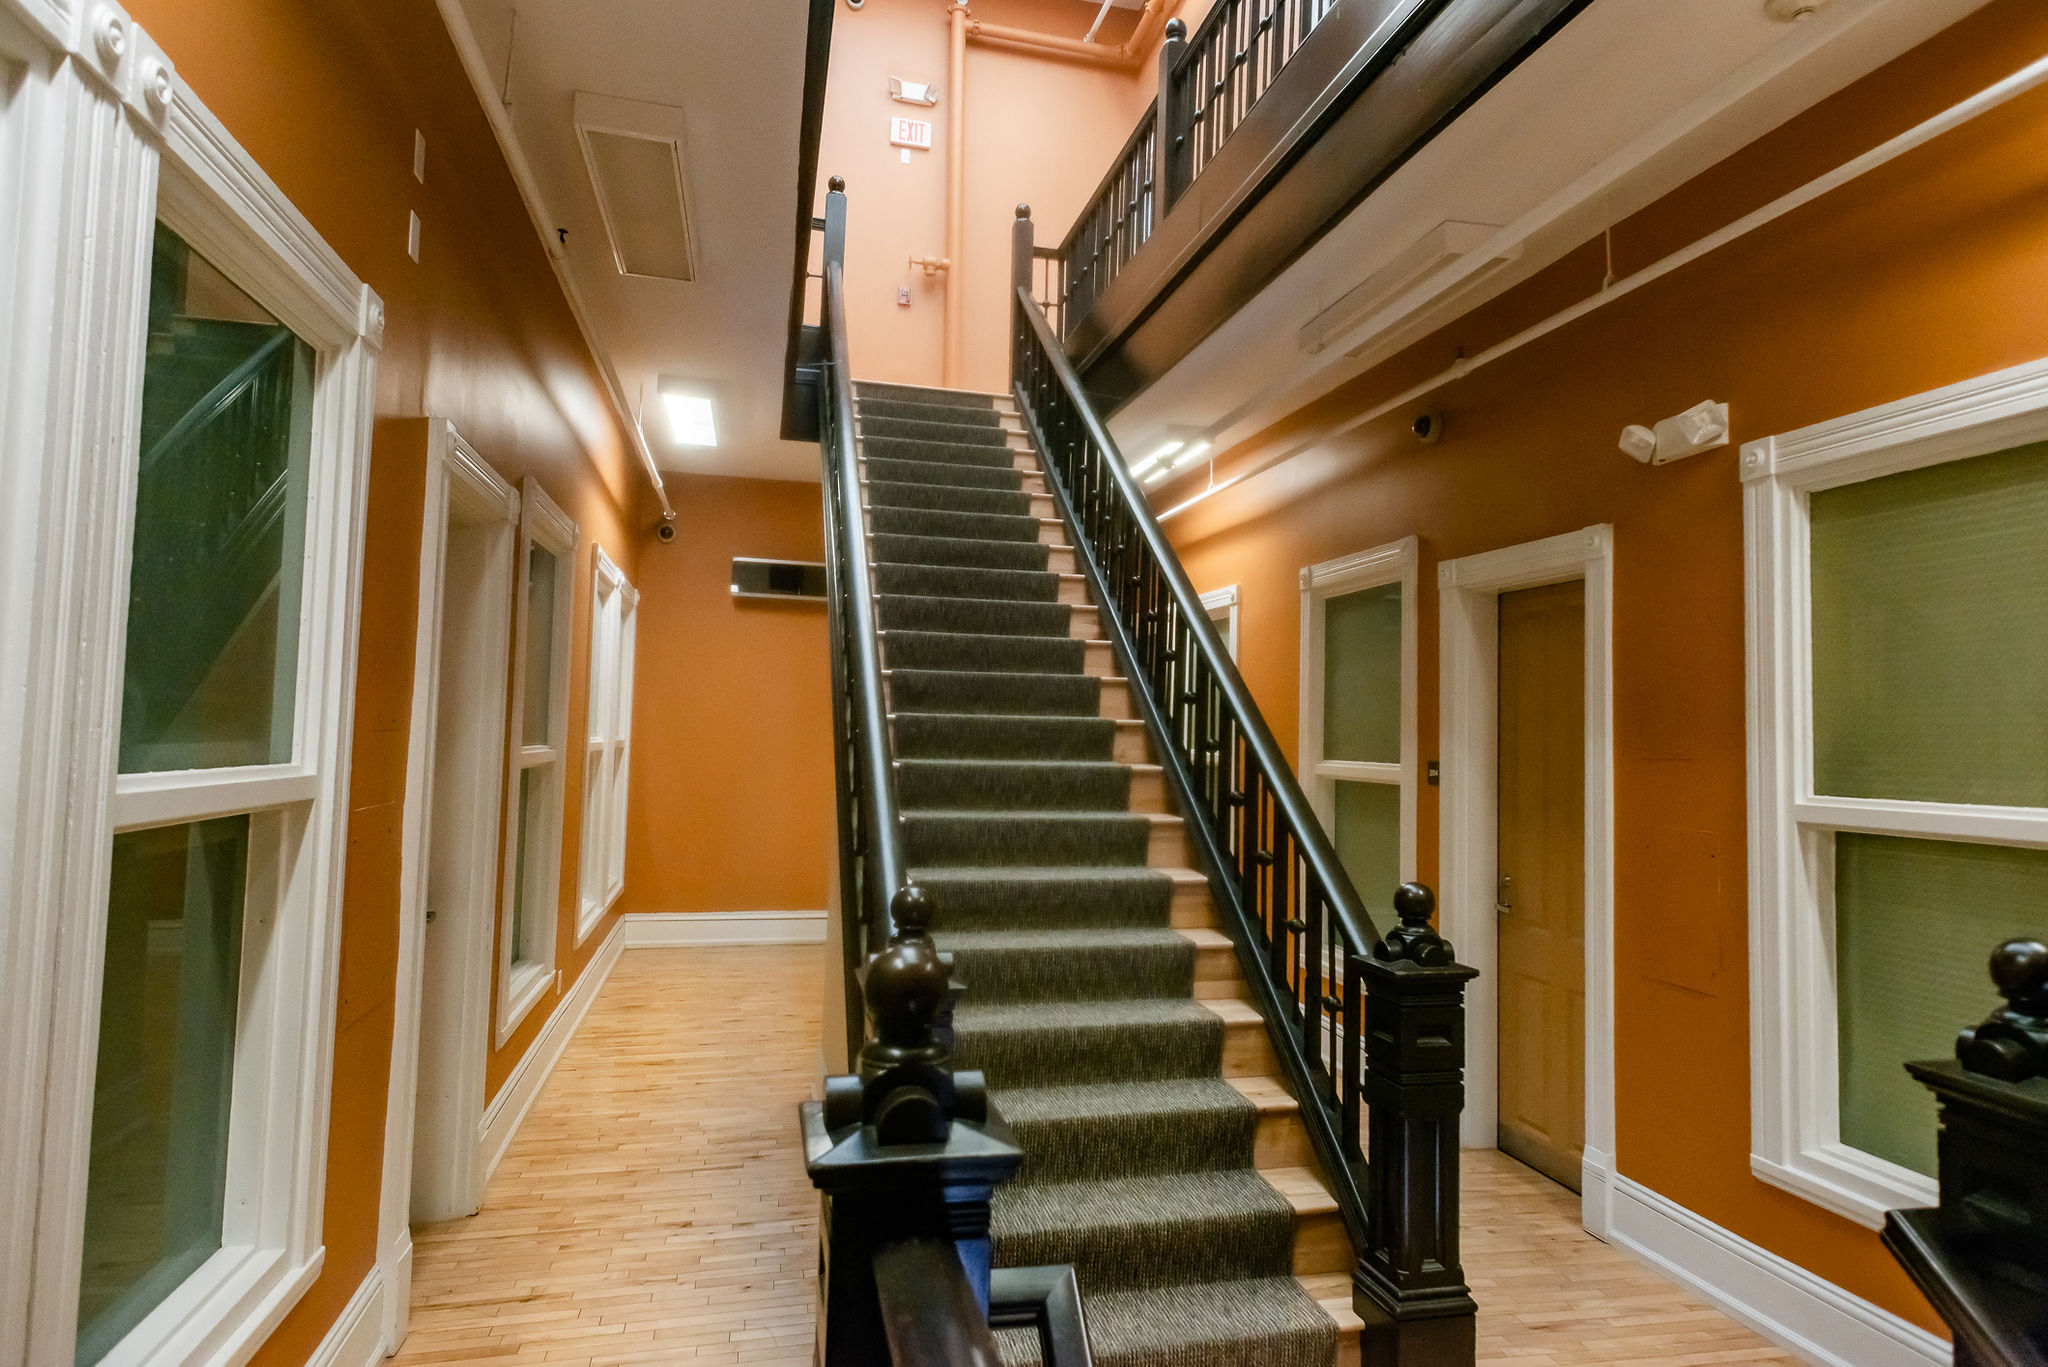 historic apartment stairway orange walls